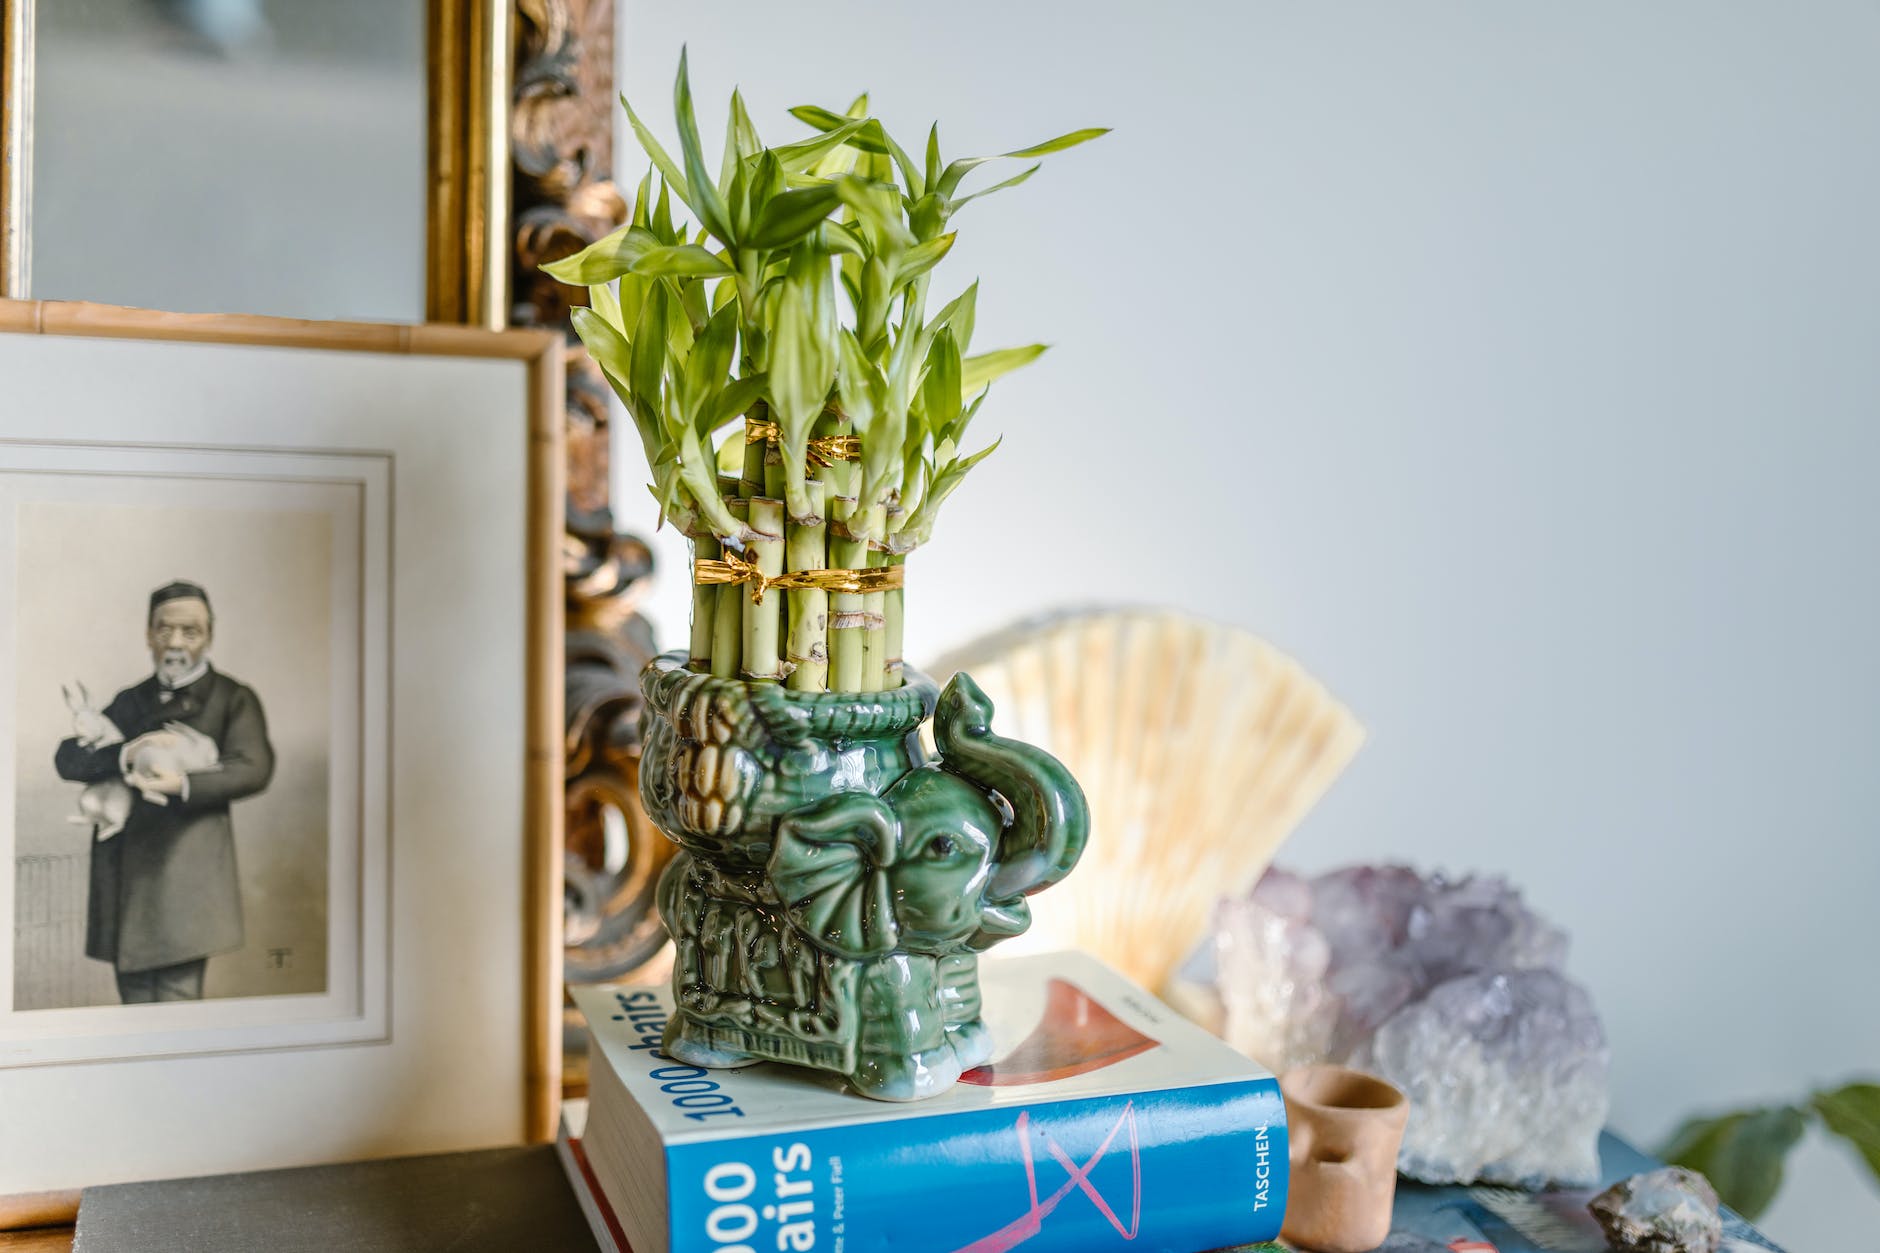 an elephant figurine vase with plants